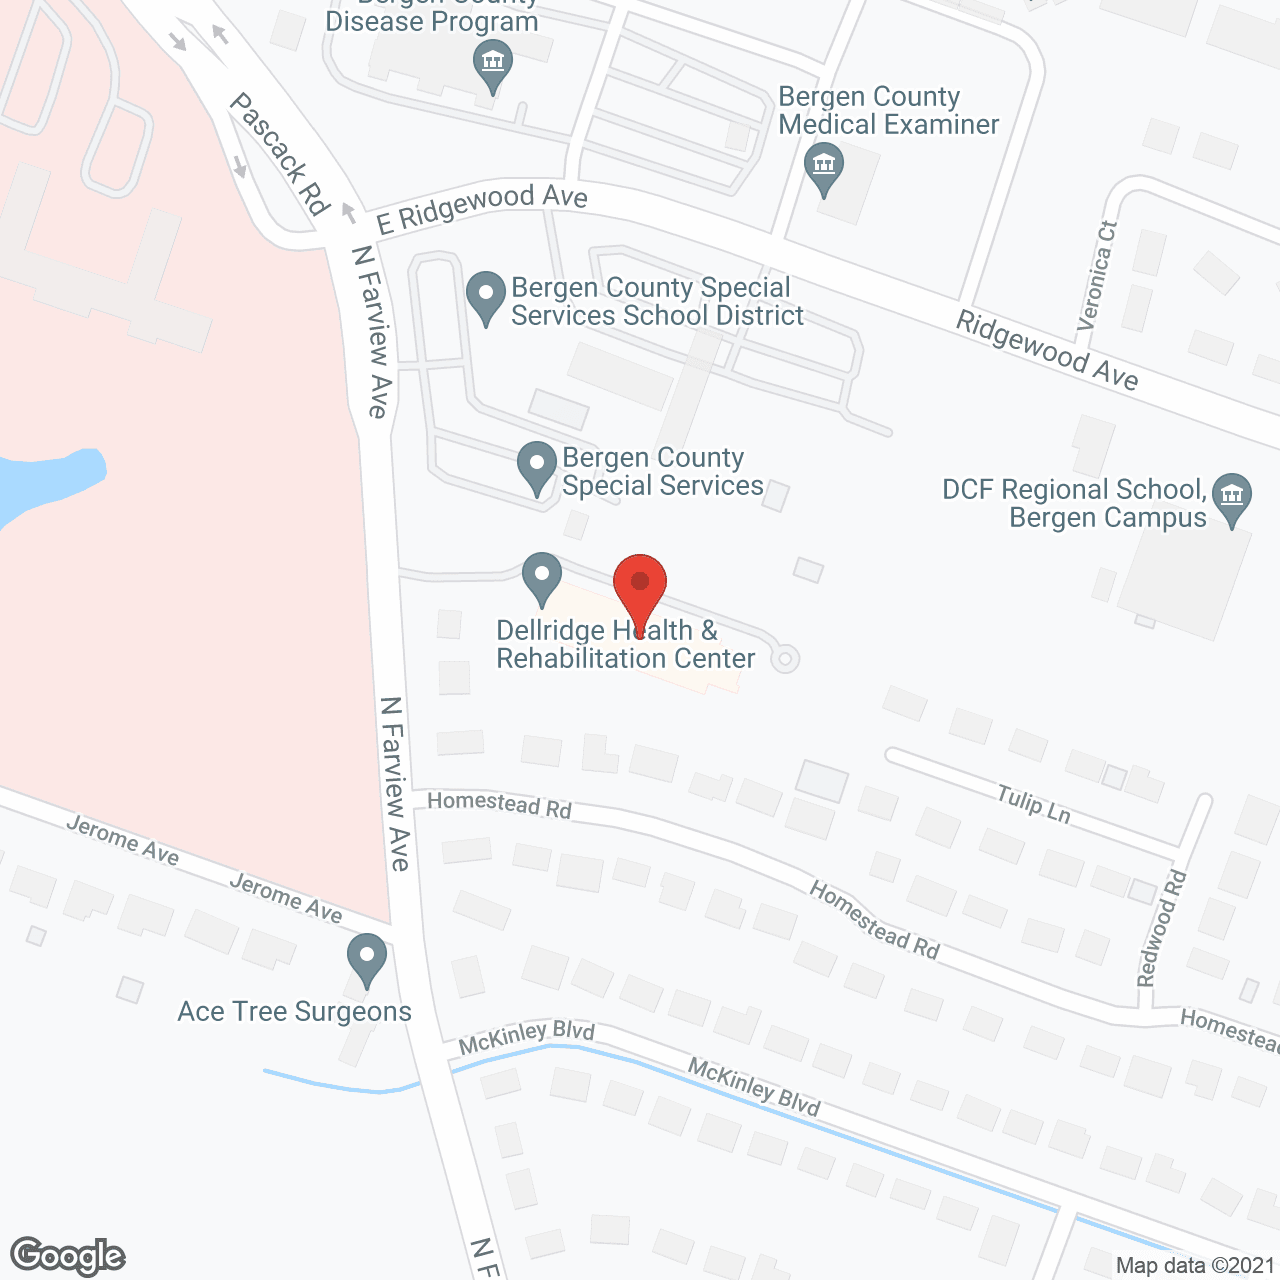 Dellridge Health and Rehabilitation Center in google map